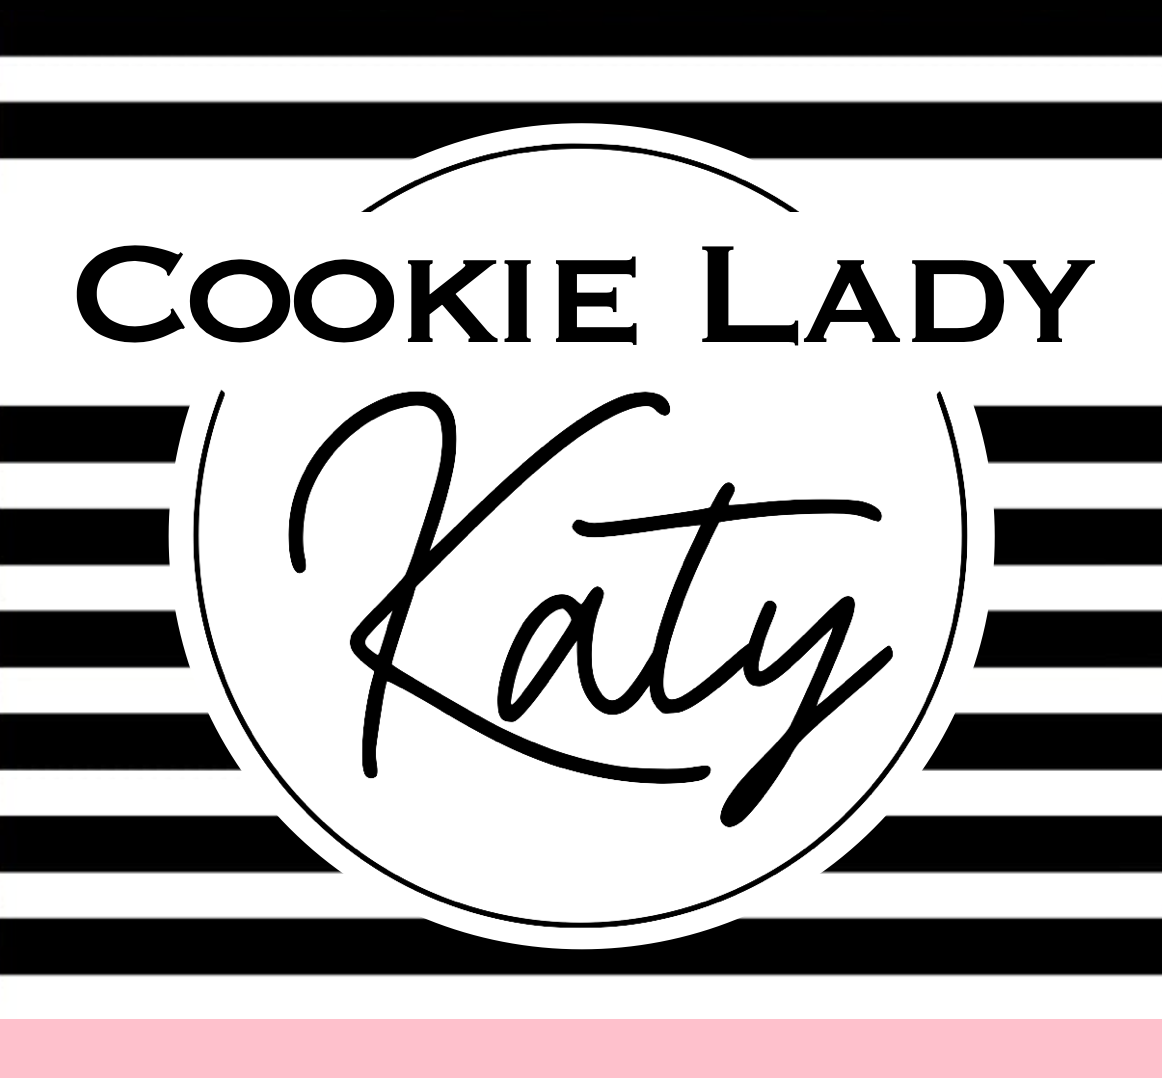 Cookie Lady Katy